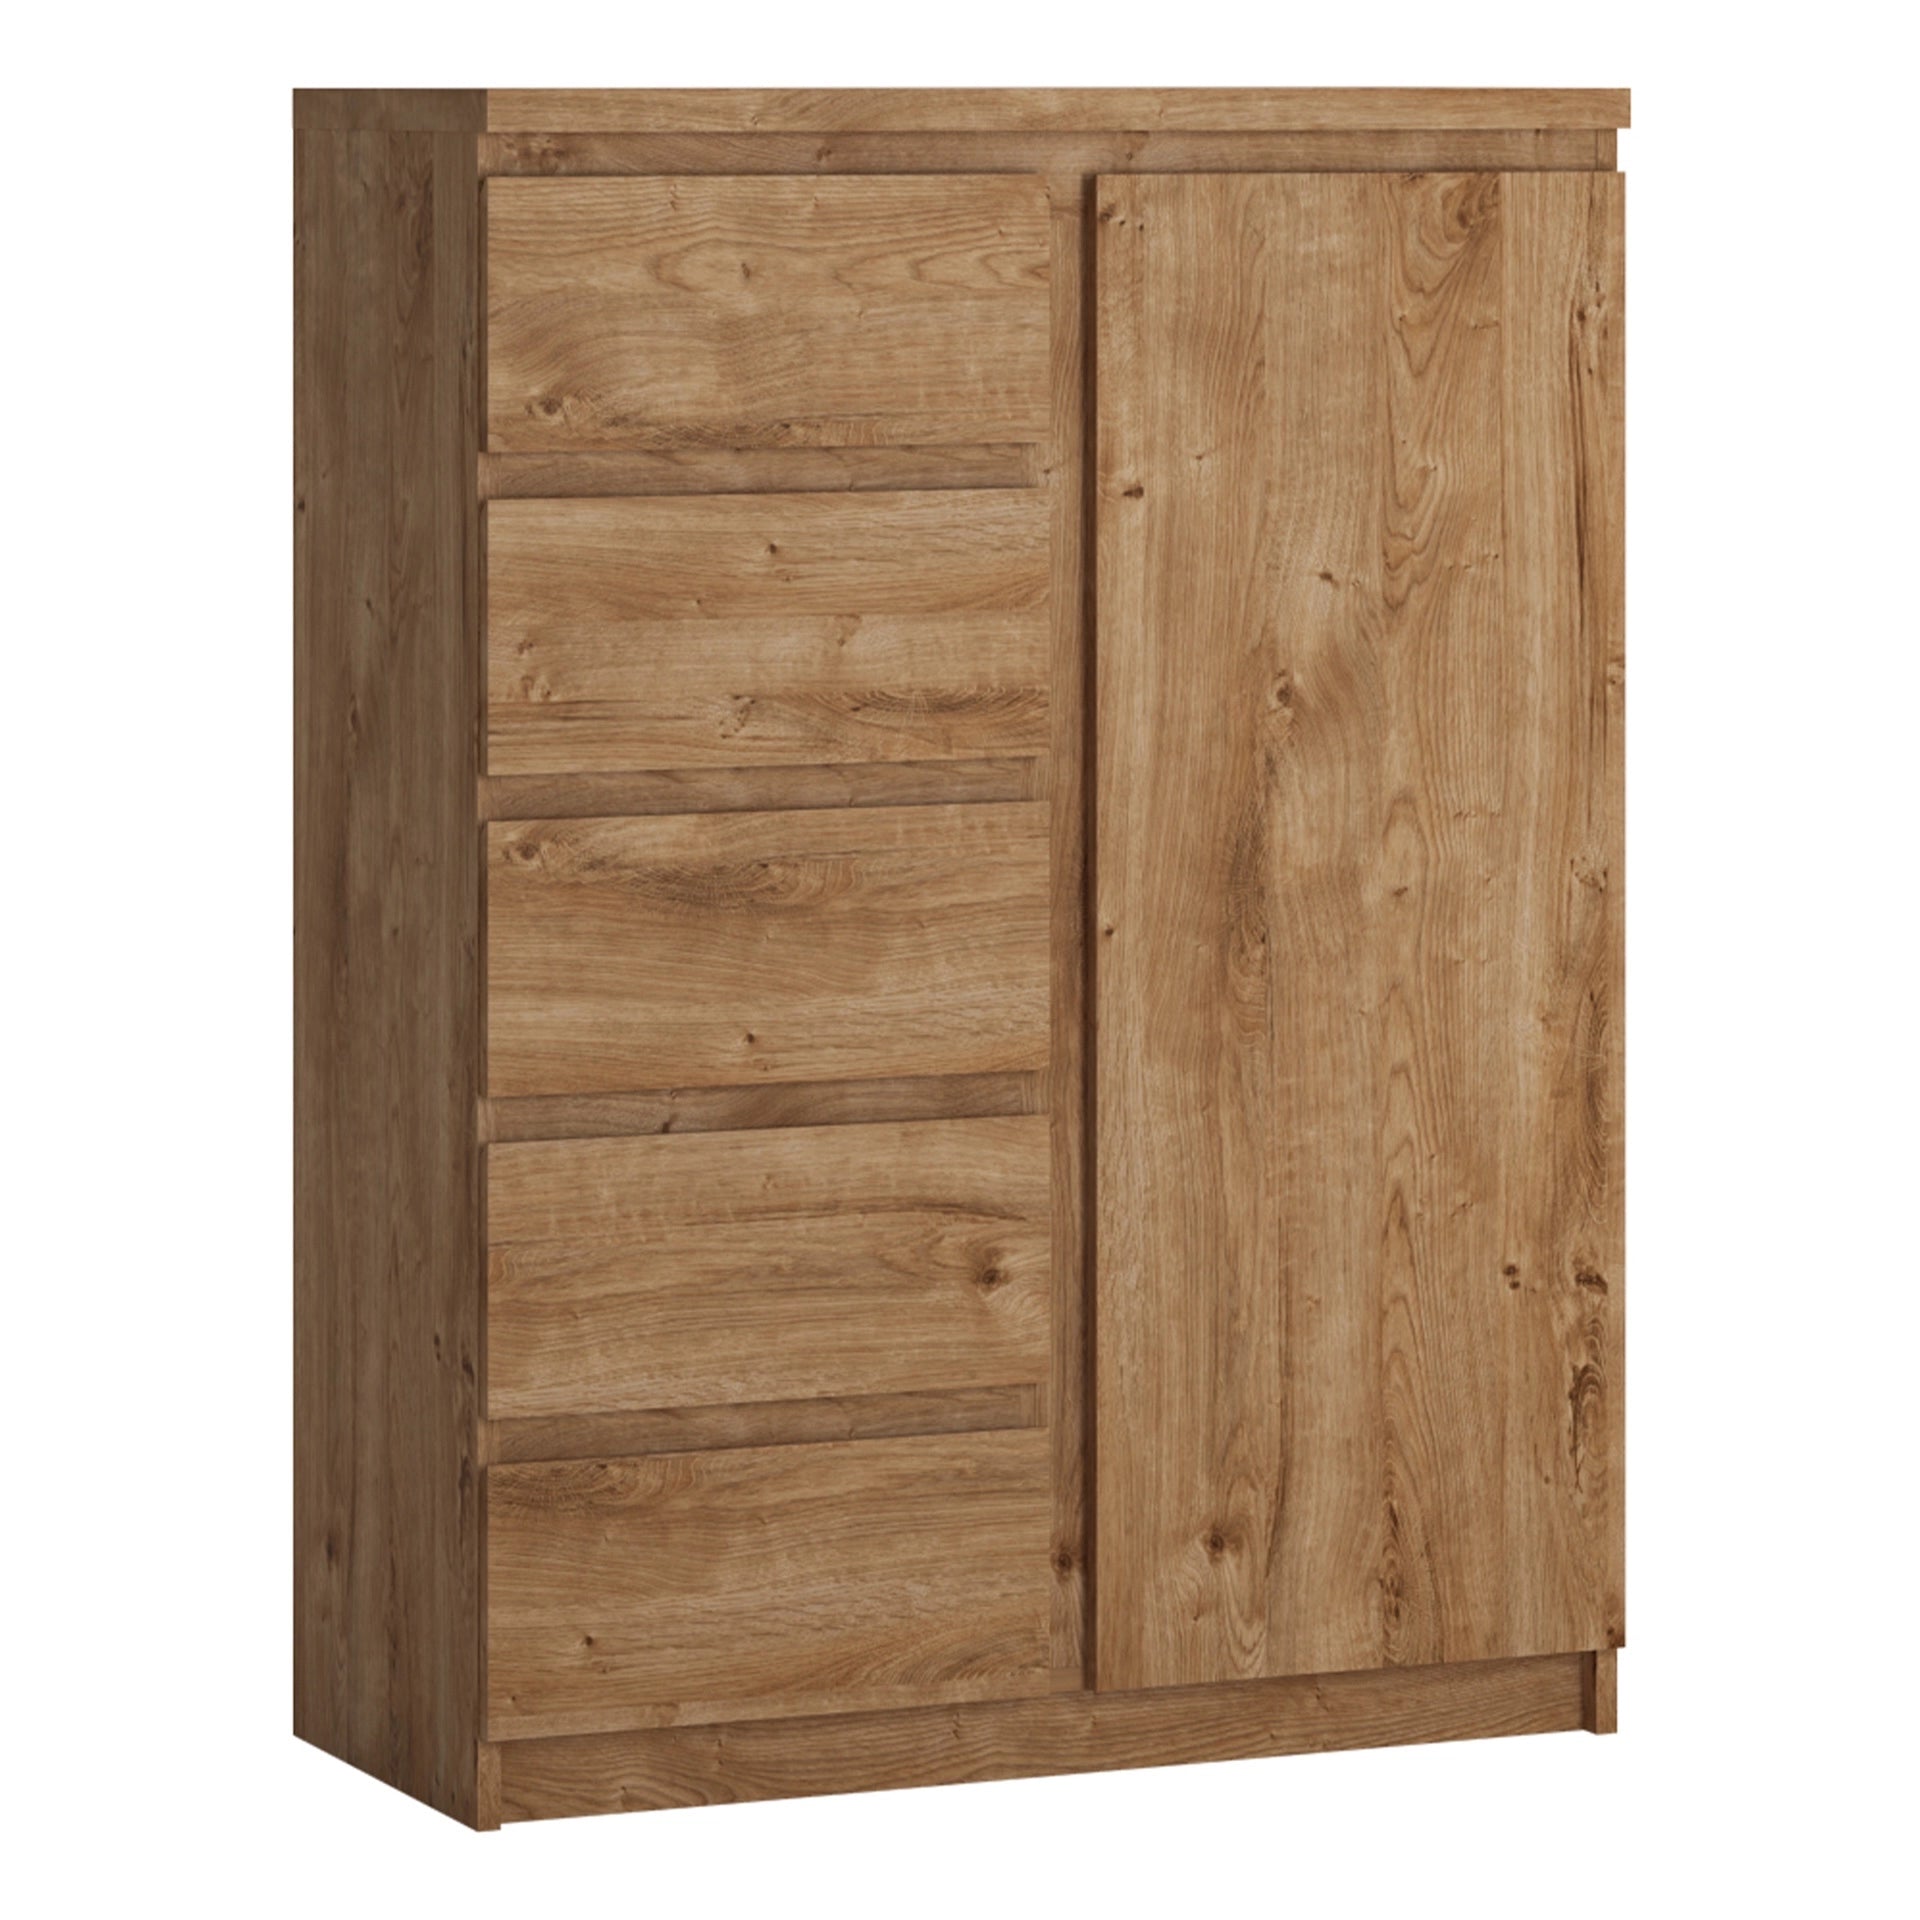 Furniture To Go Fribo 1 Door 5 Drawer Cabinet in Oak